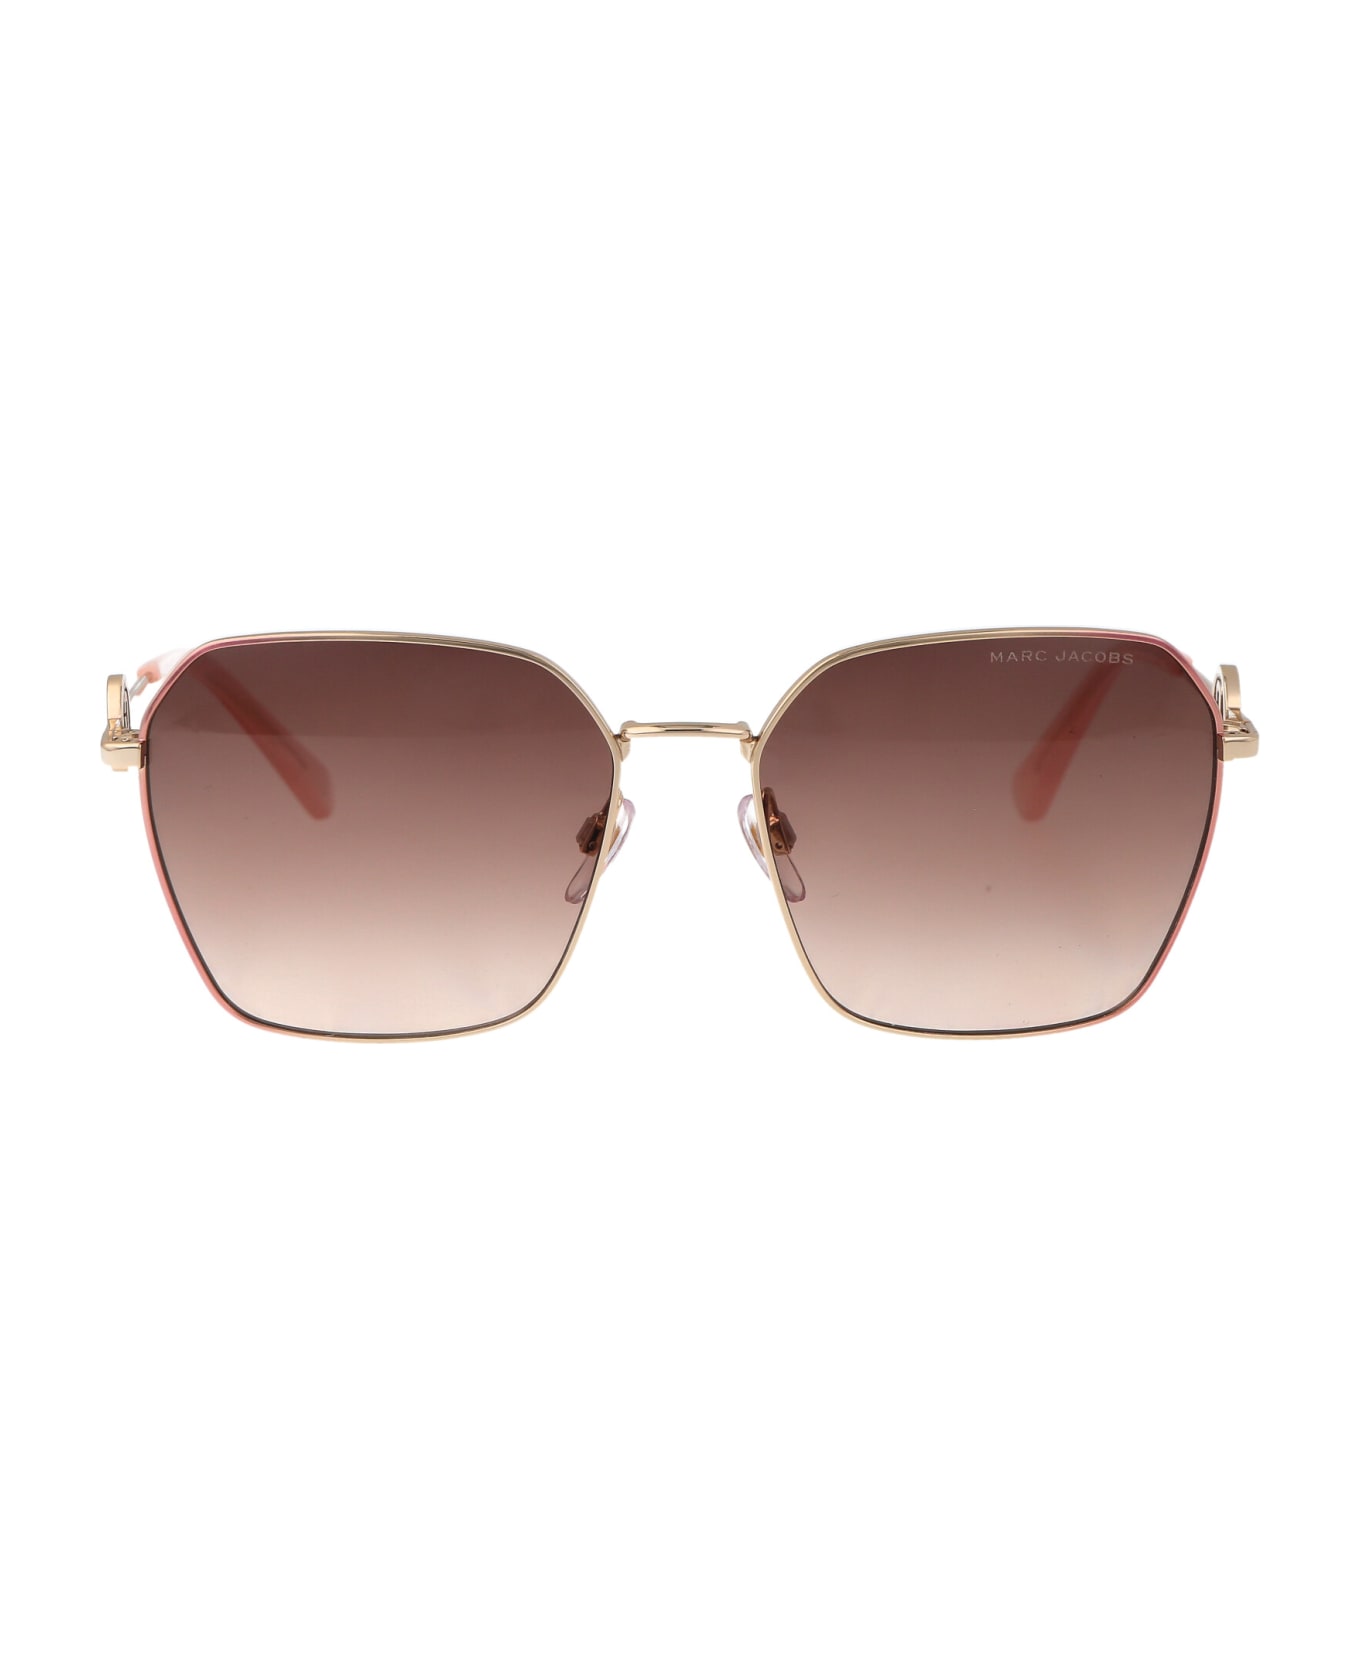 Marc Jacobs Eyewear Marc 729/s Sunglasses - EYRHA GOLD PINK サングラス